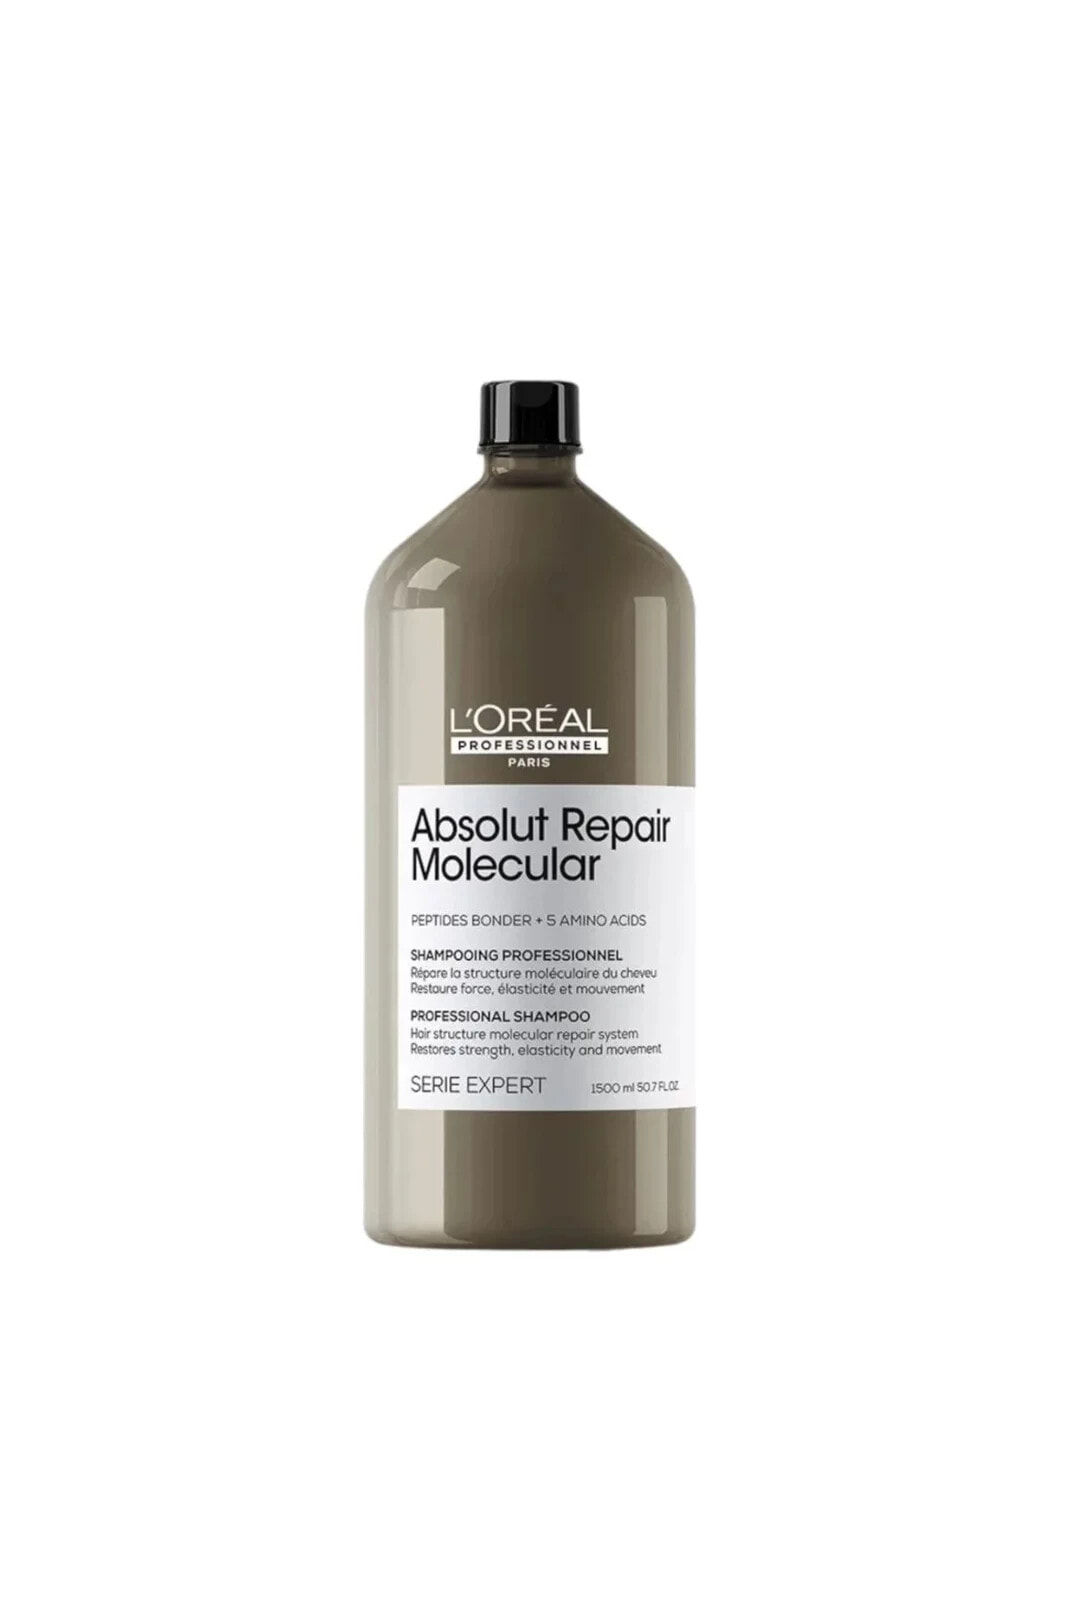 LOREAL Absolut Repair Molecular Tüm Saçlar İçin Sülfatsız Onarıcı Şampuan 1500ml 50.7 fl oz CYT7976